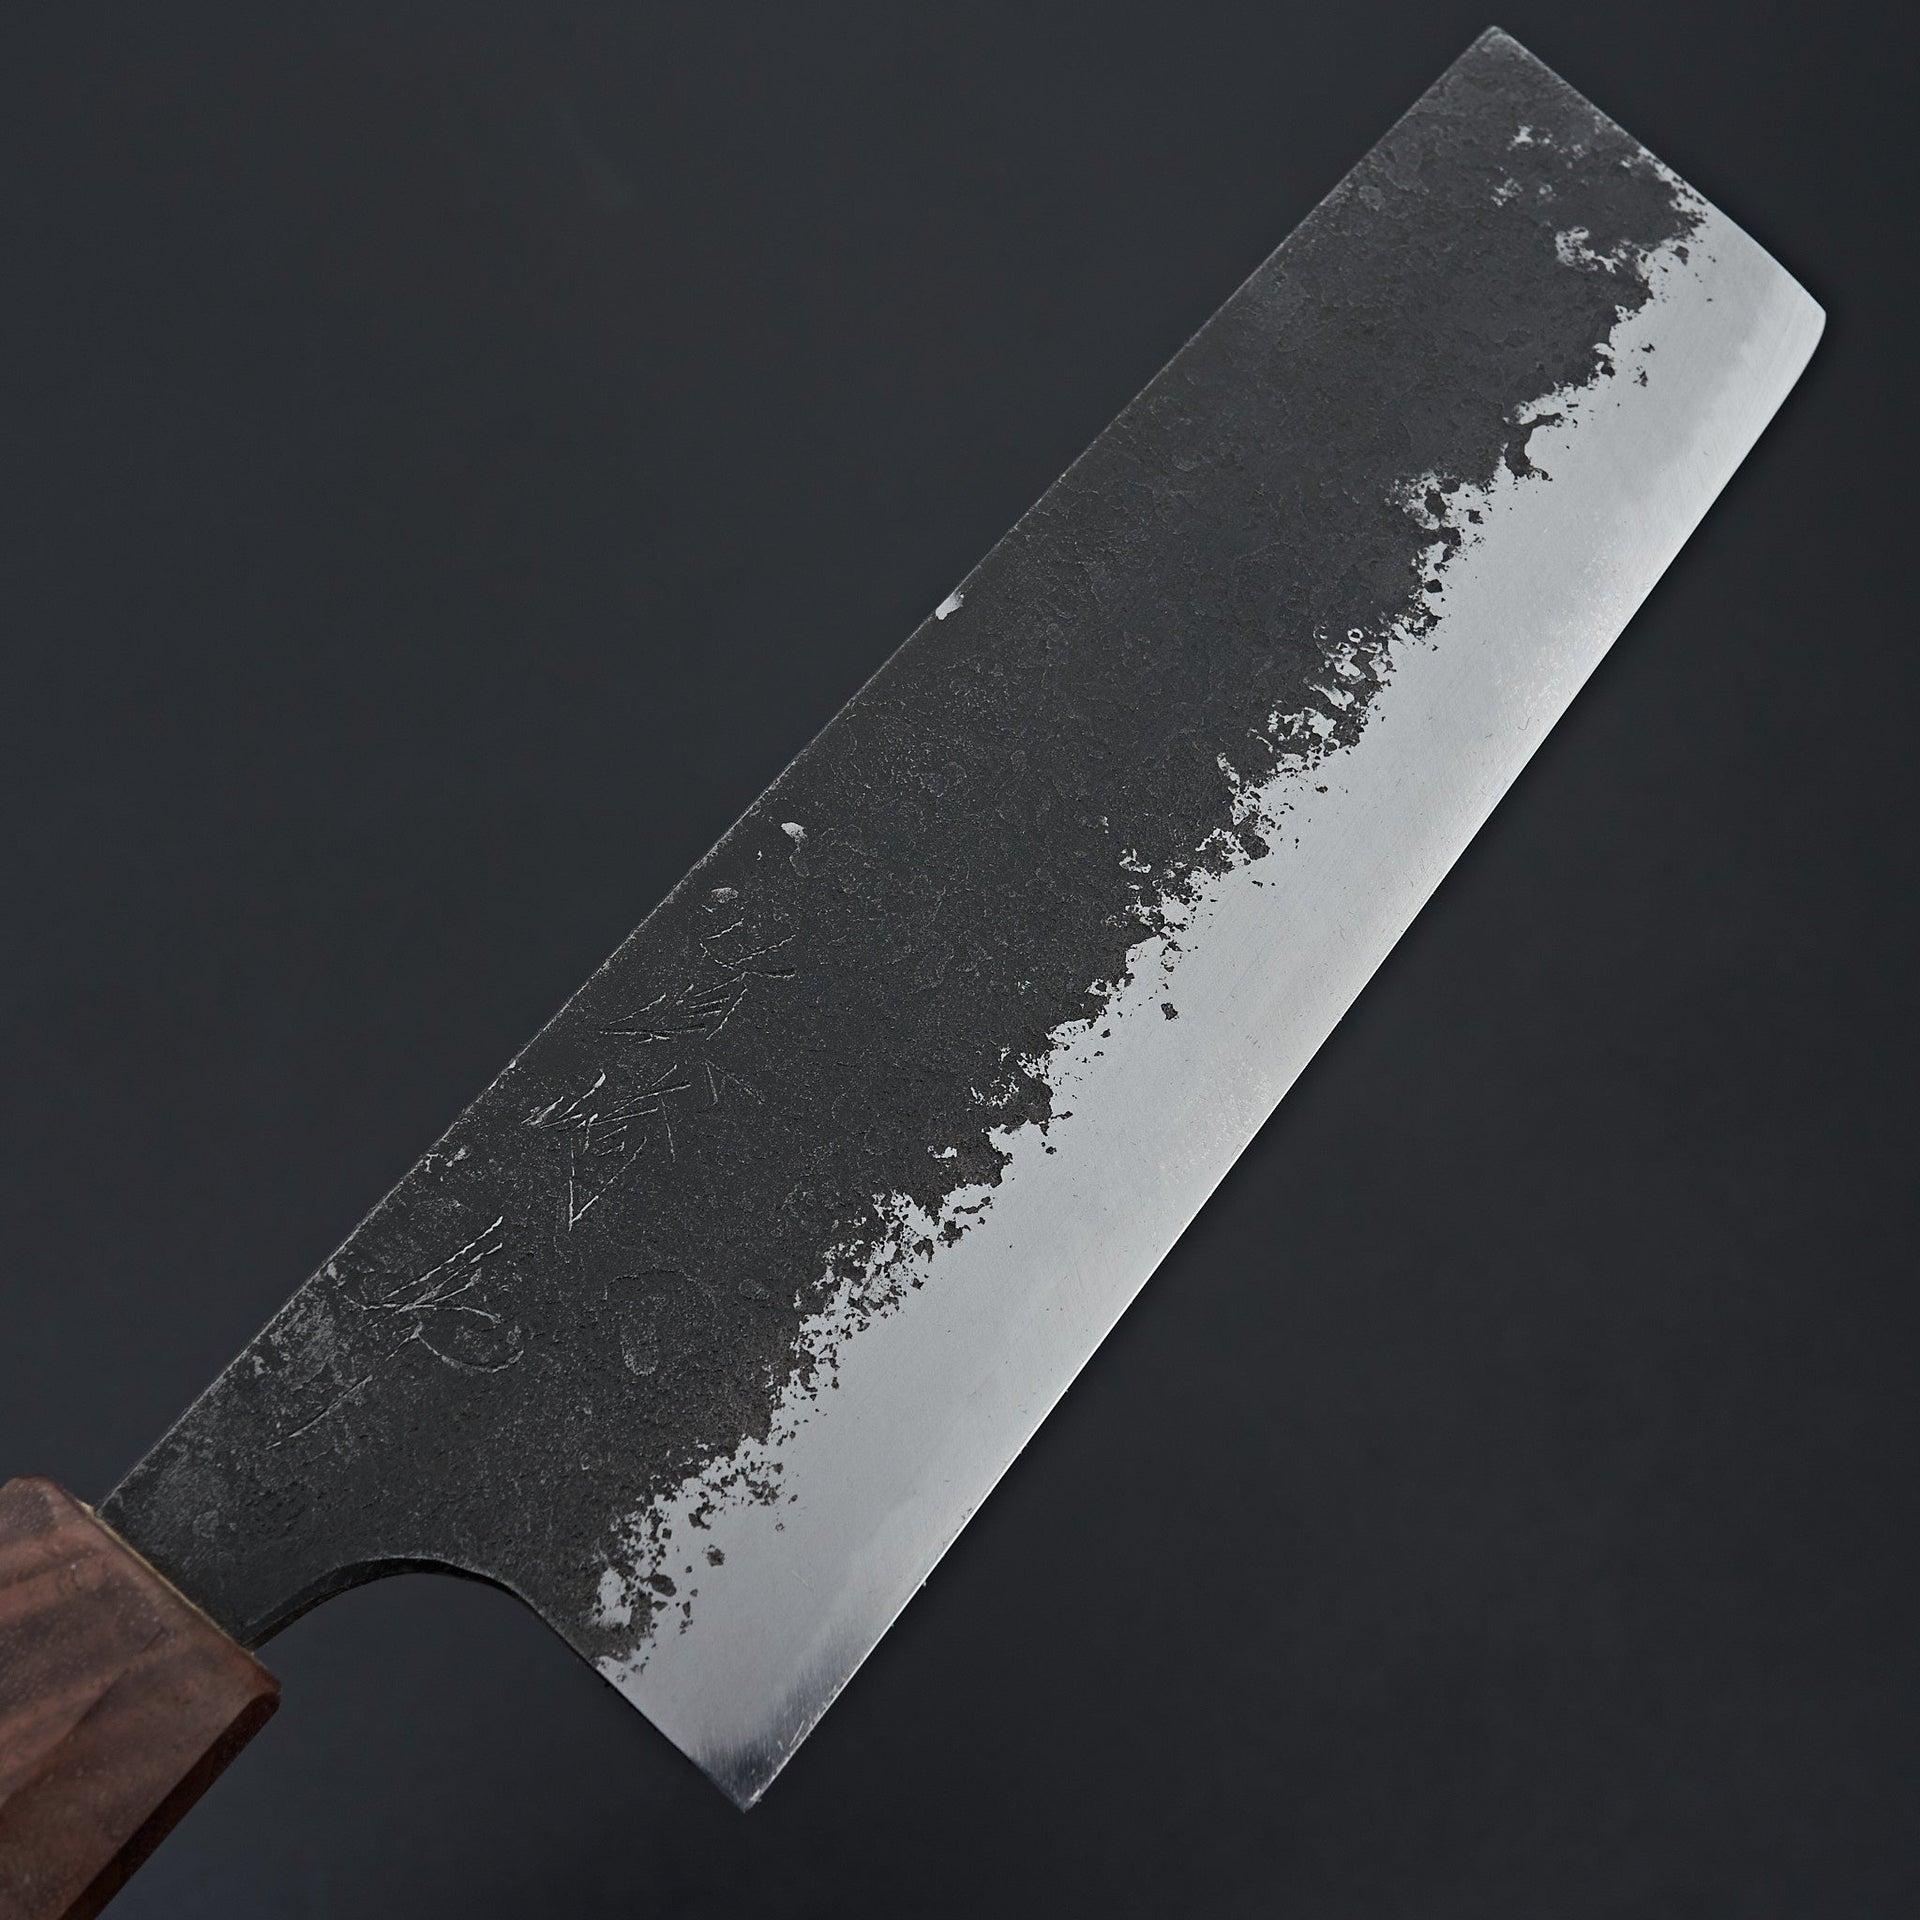 Mazaki White#2 Kuro Nashiji Nakiri 165mm-Knife-Mazaki-Carbon Knife Co